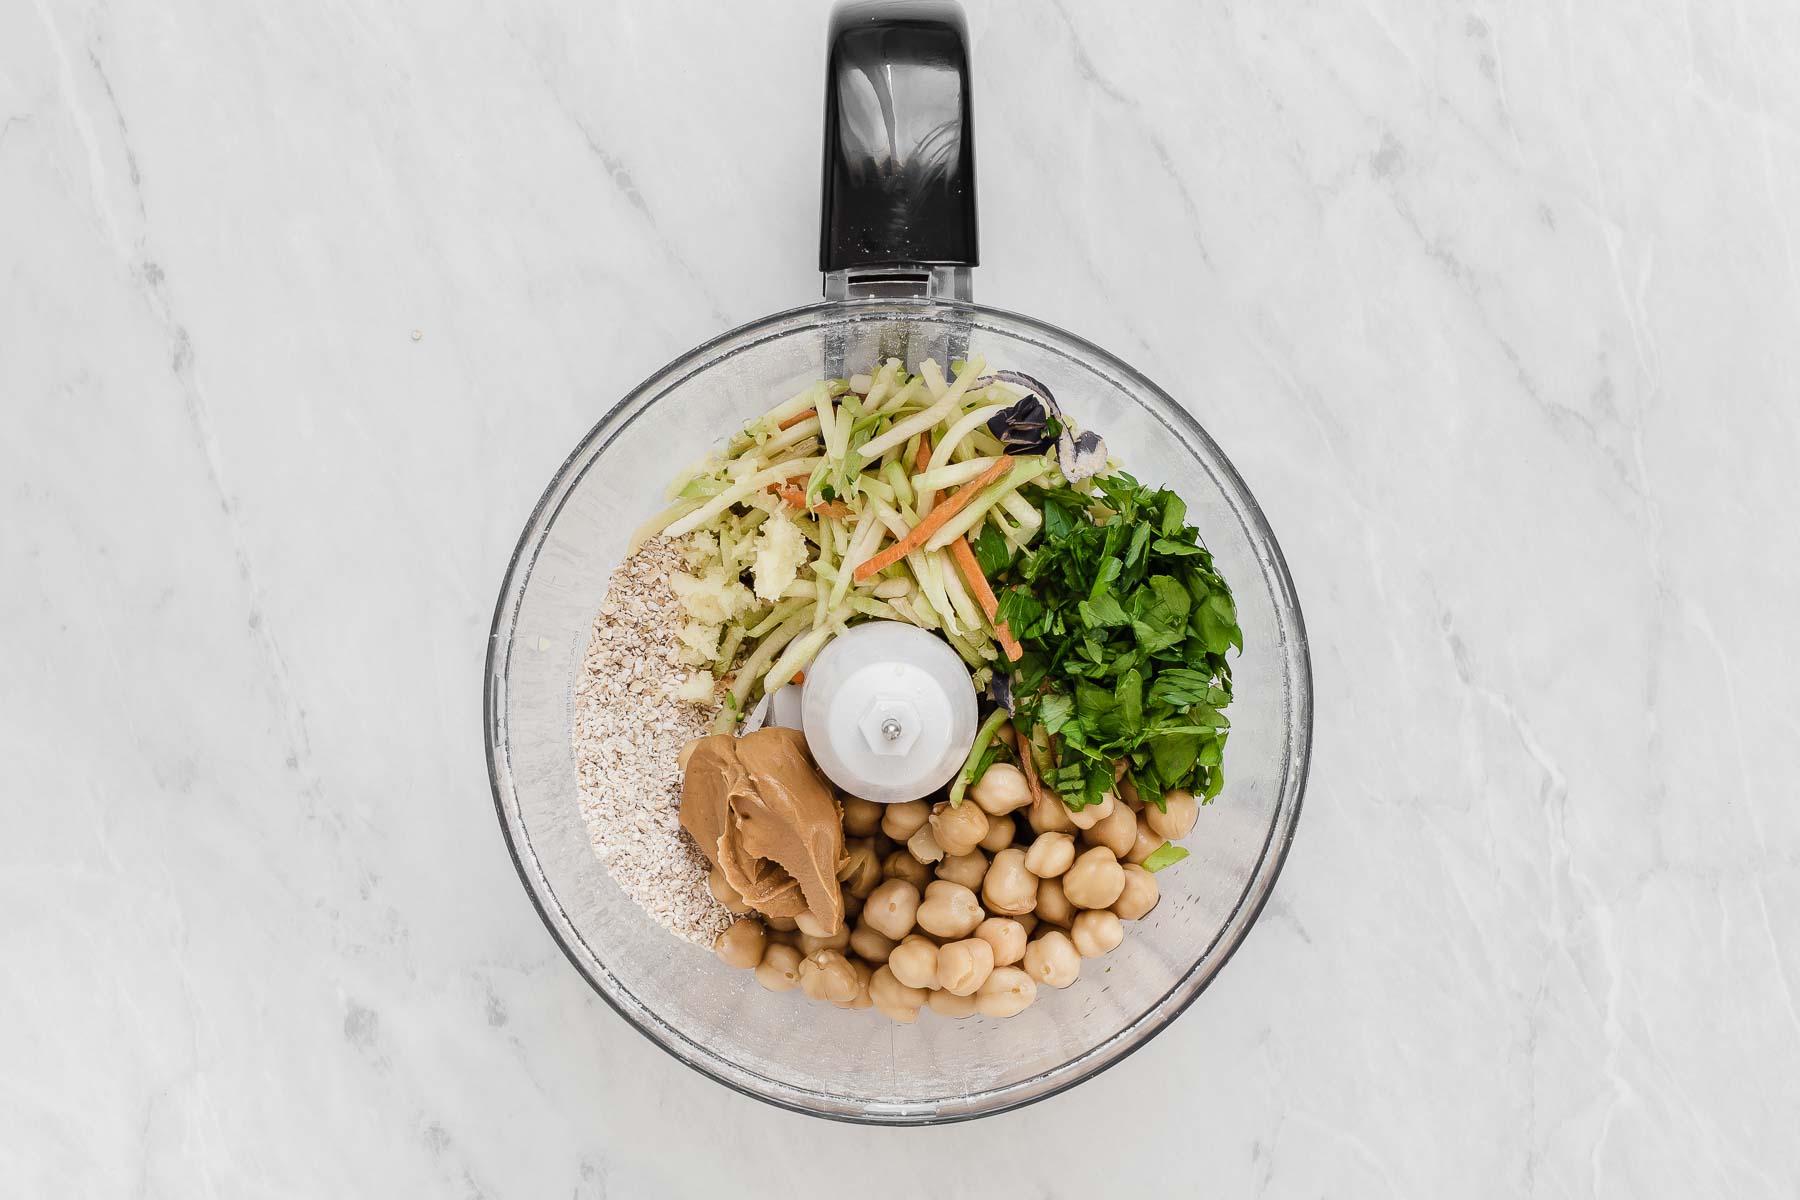 Chickpeas, cilantro, peanut butter and broccoli slaw in food processor bowl.